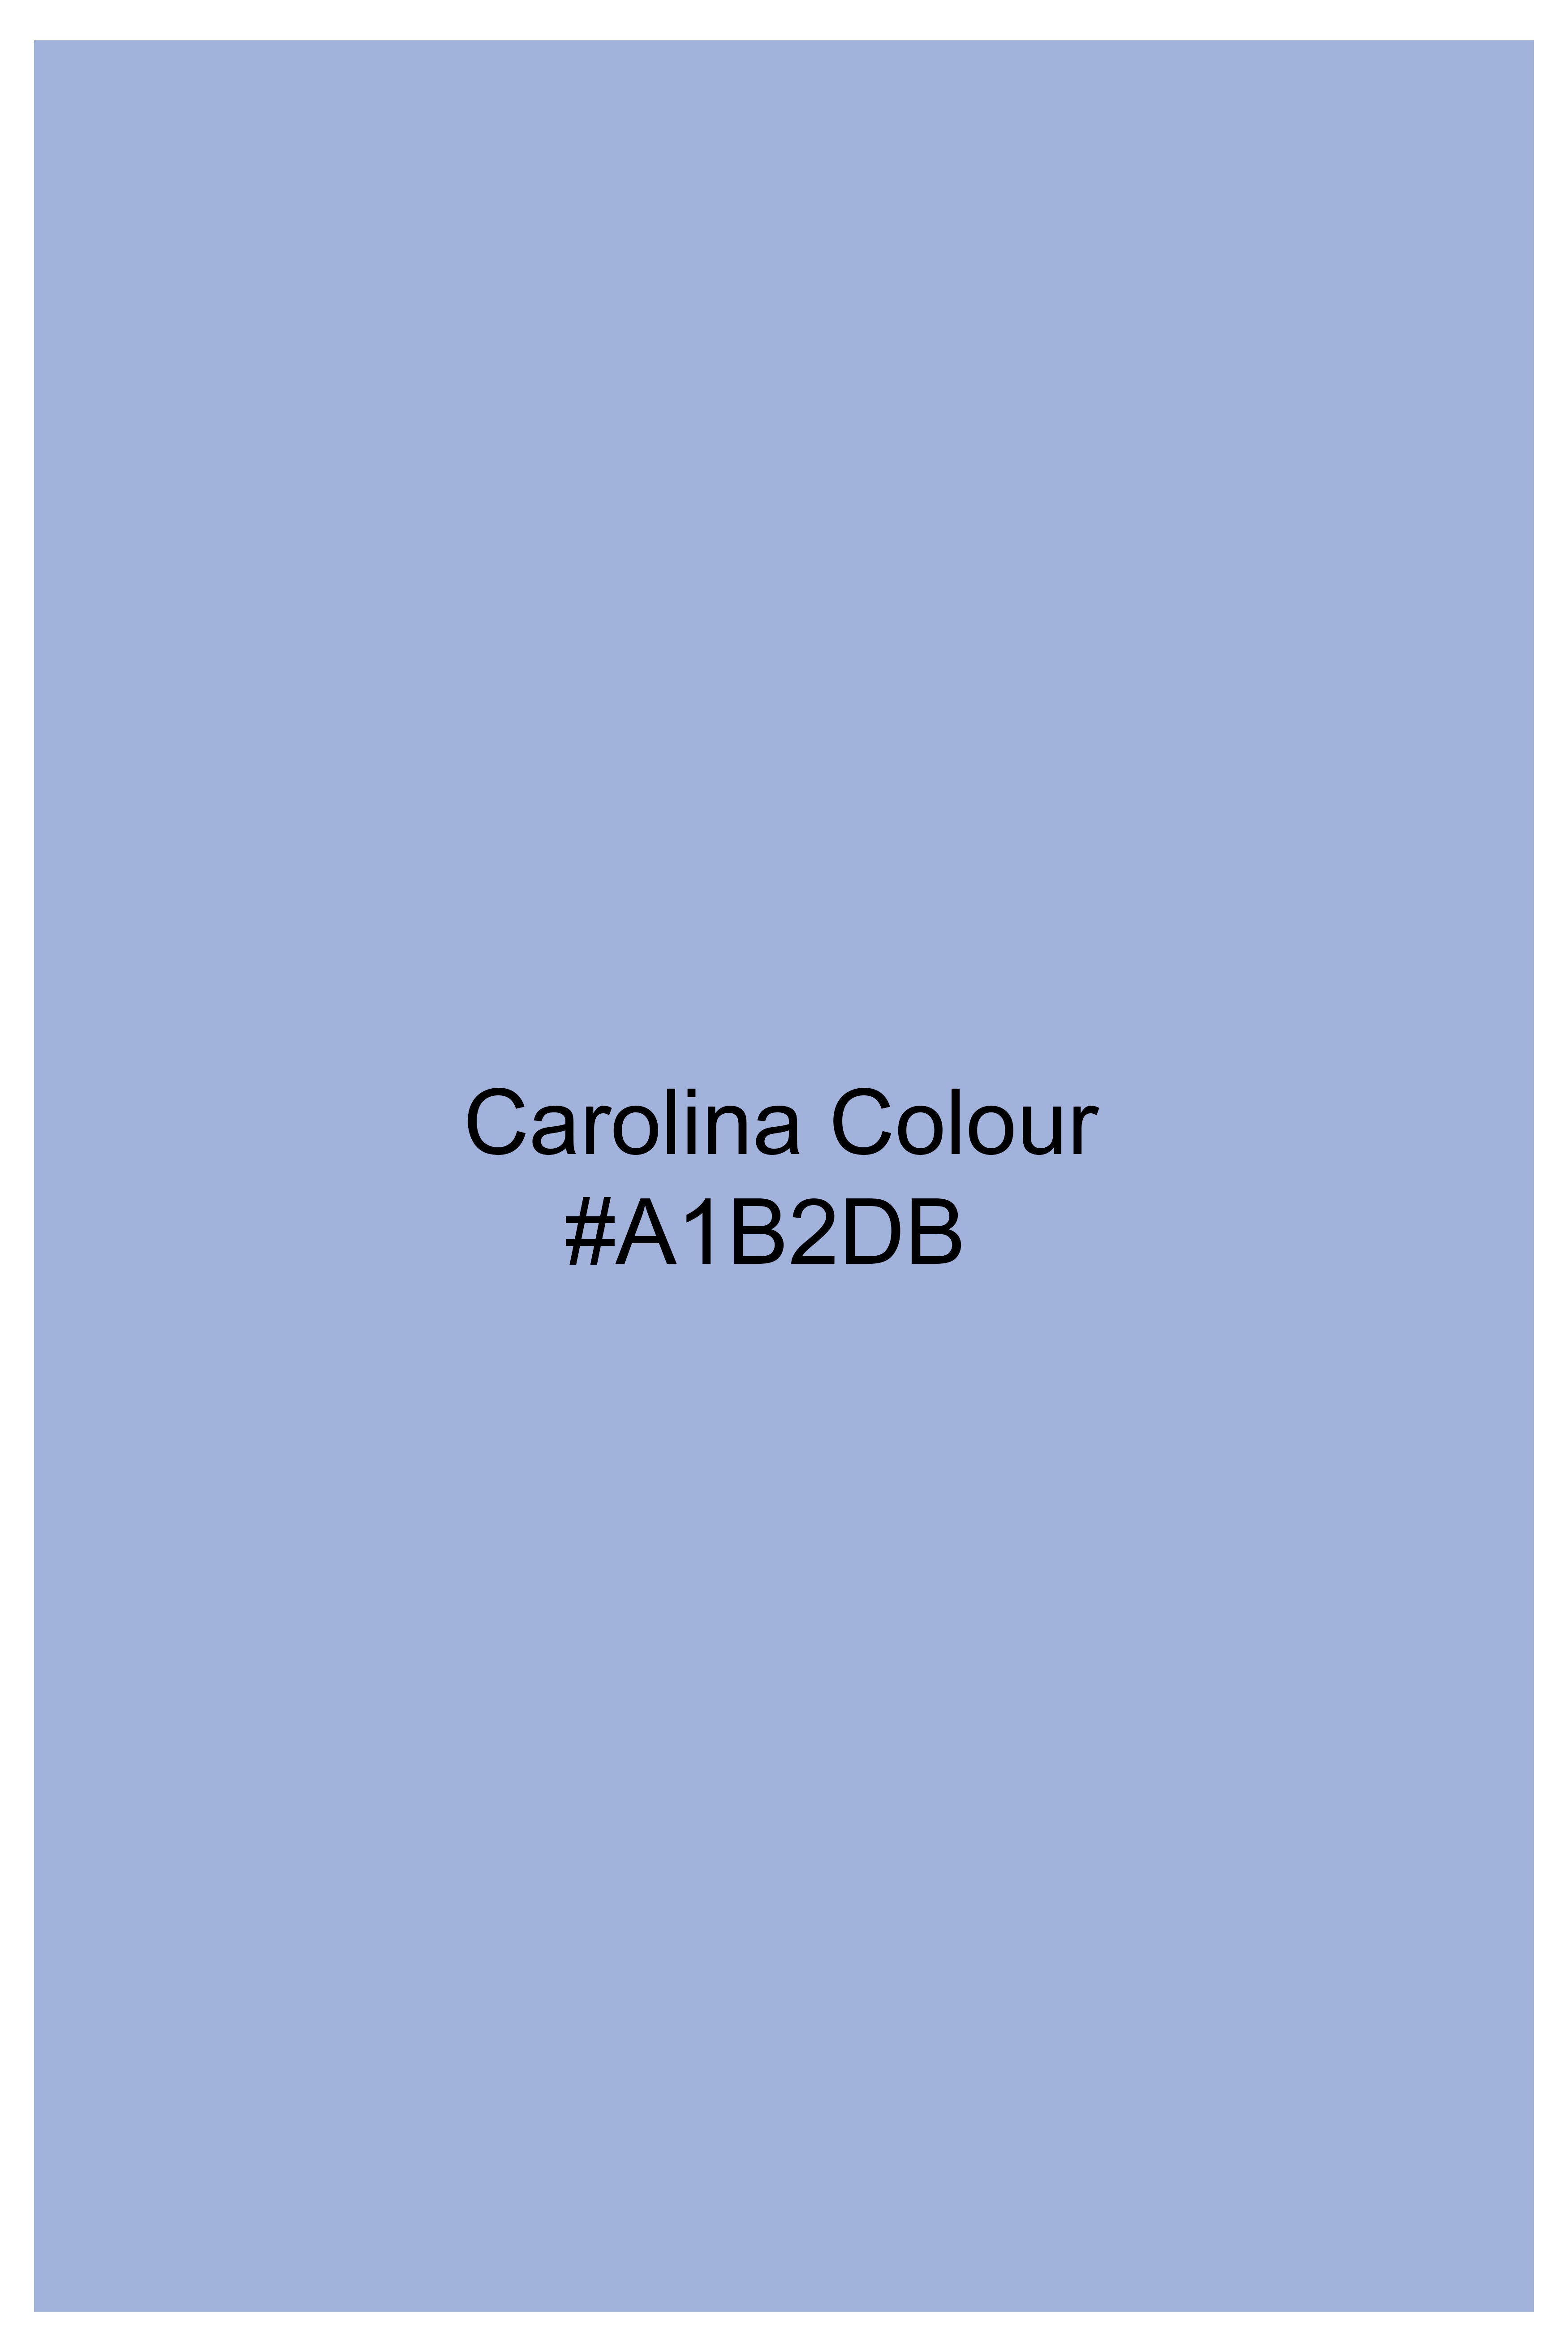 Carolina Blue Embroidered Twill Premium Cotton Designer Shirt 6170-CA-E199-38, 6170-CA-E199-H-38, 6170-CA-E199-39, 6170-CA-E199-H-39, 6170-CA-E199-40, 6170-CA-E199-H-40, 6170-CA-E199-42, 6170-CA-E199-H-42, 6170-CA-E199-44, 6170-CA-E199-H-44, 6170-CA-E199-46, 6170-CA-E199-H-46, 6170-CA-E199-48, 6170-CA-E199-H-48, 6170-CA-E199-50, 6170-CA-E199-H-50, 6170-CA-E199-52, 6170-CA-E199-H-52